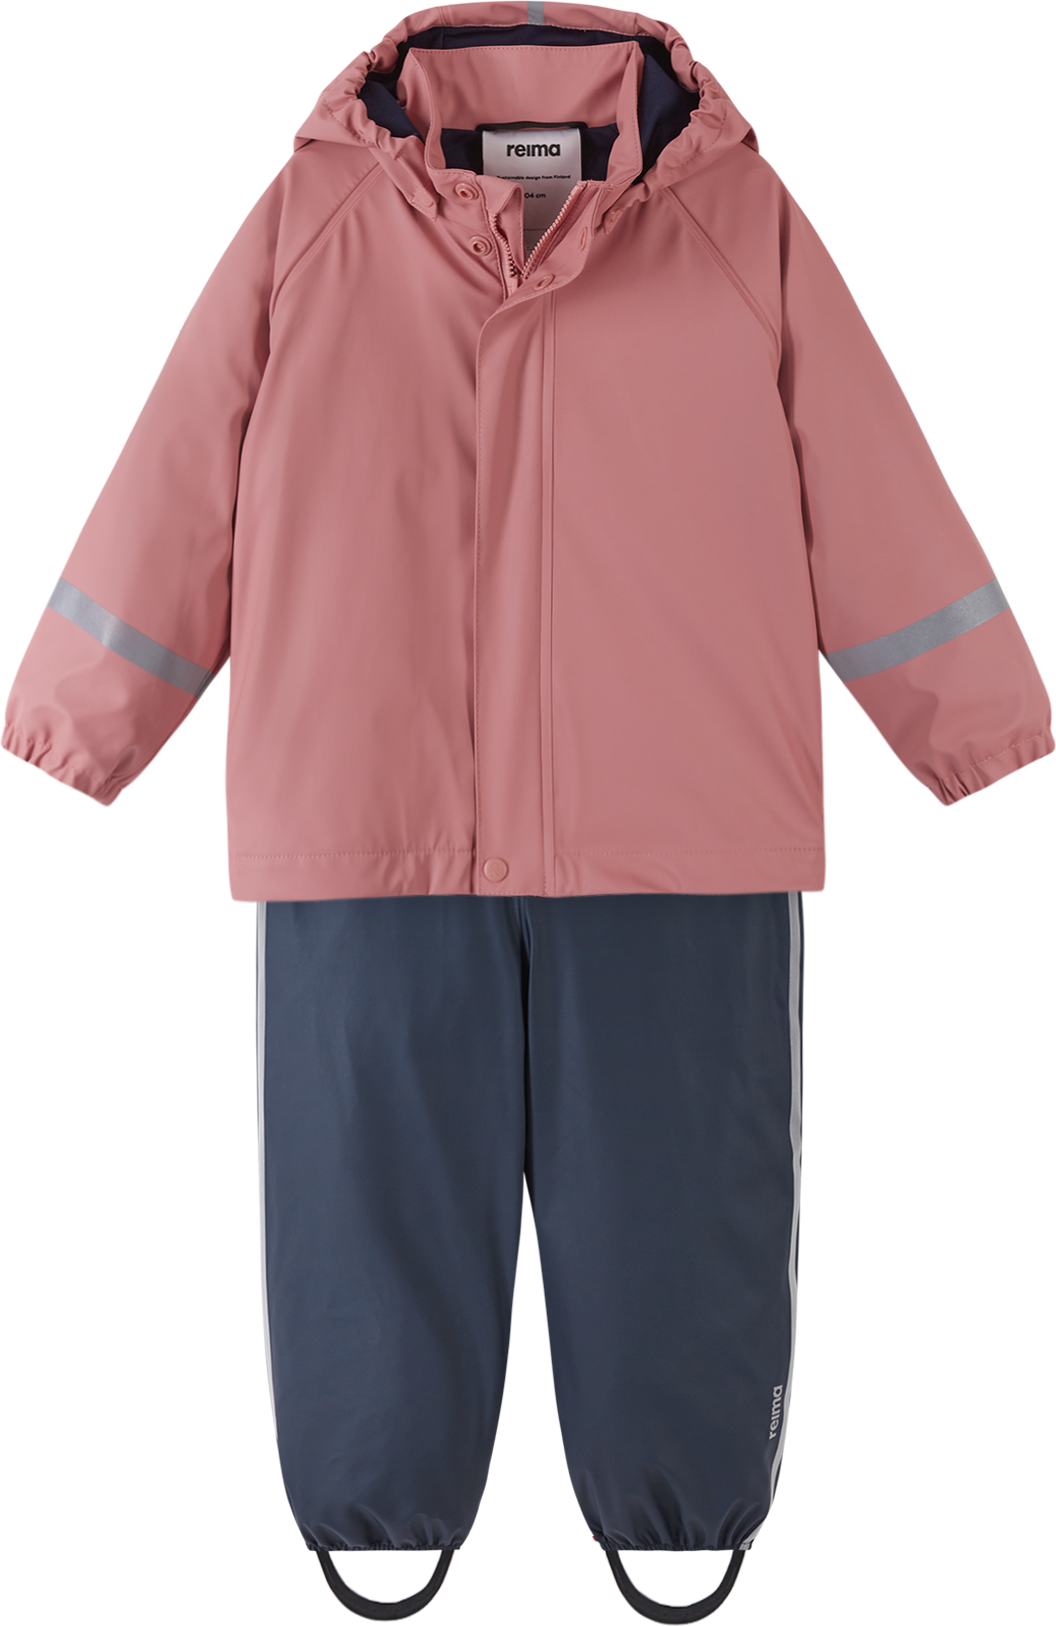 Reima Reima Kids' Tipotella Rain Outfit Rose Blush 110 cm, Rose Blush